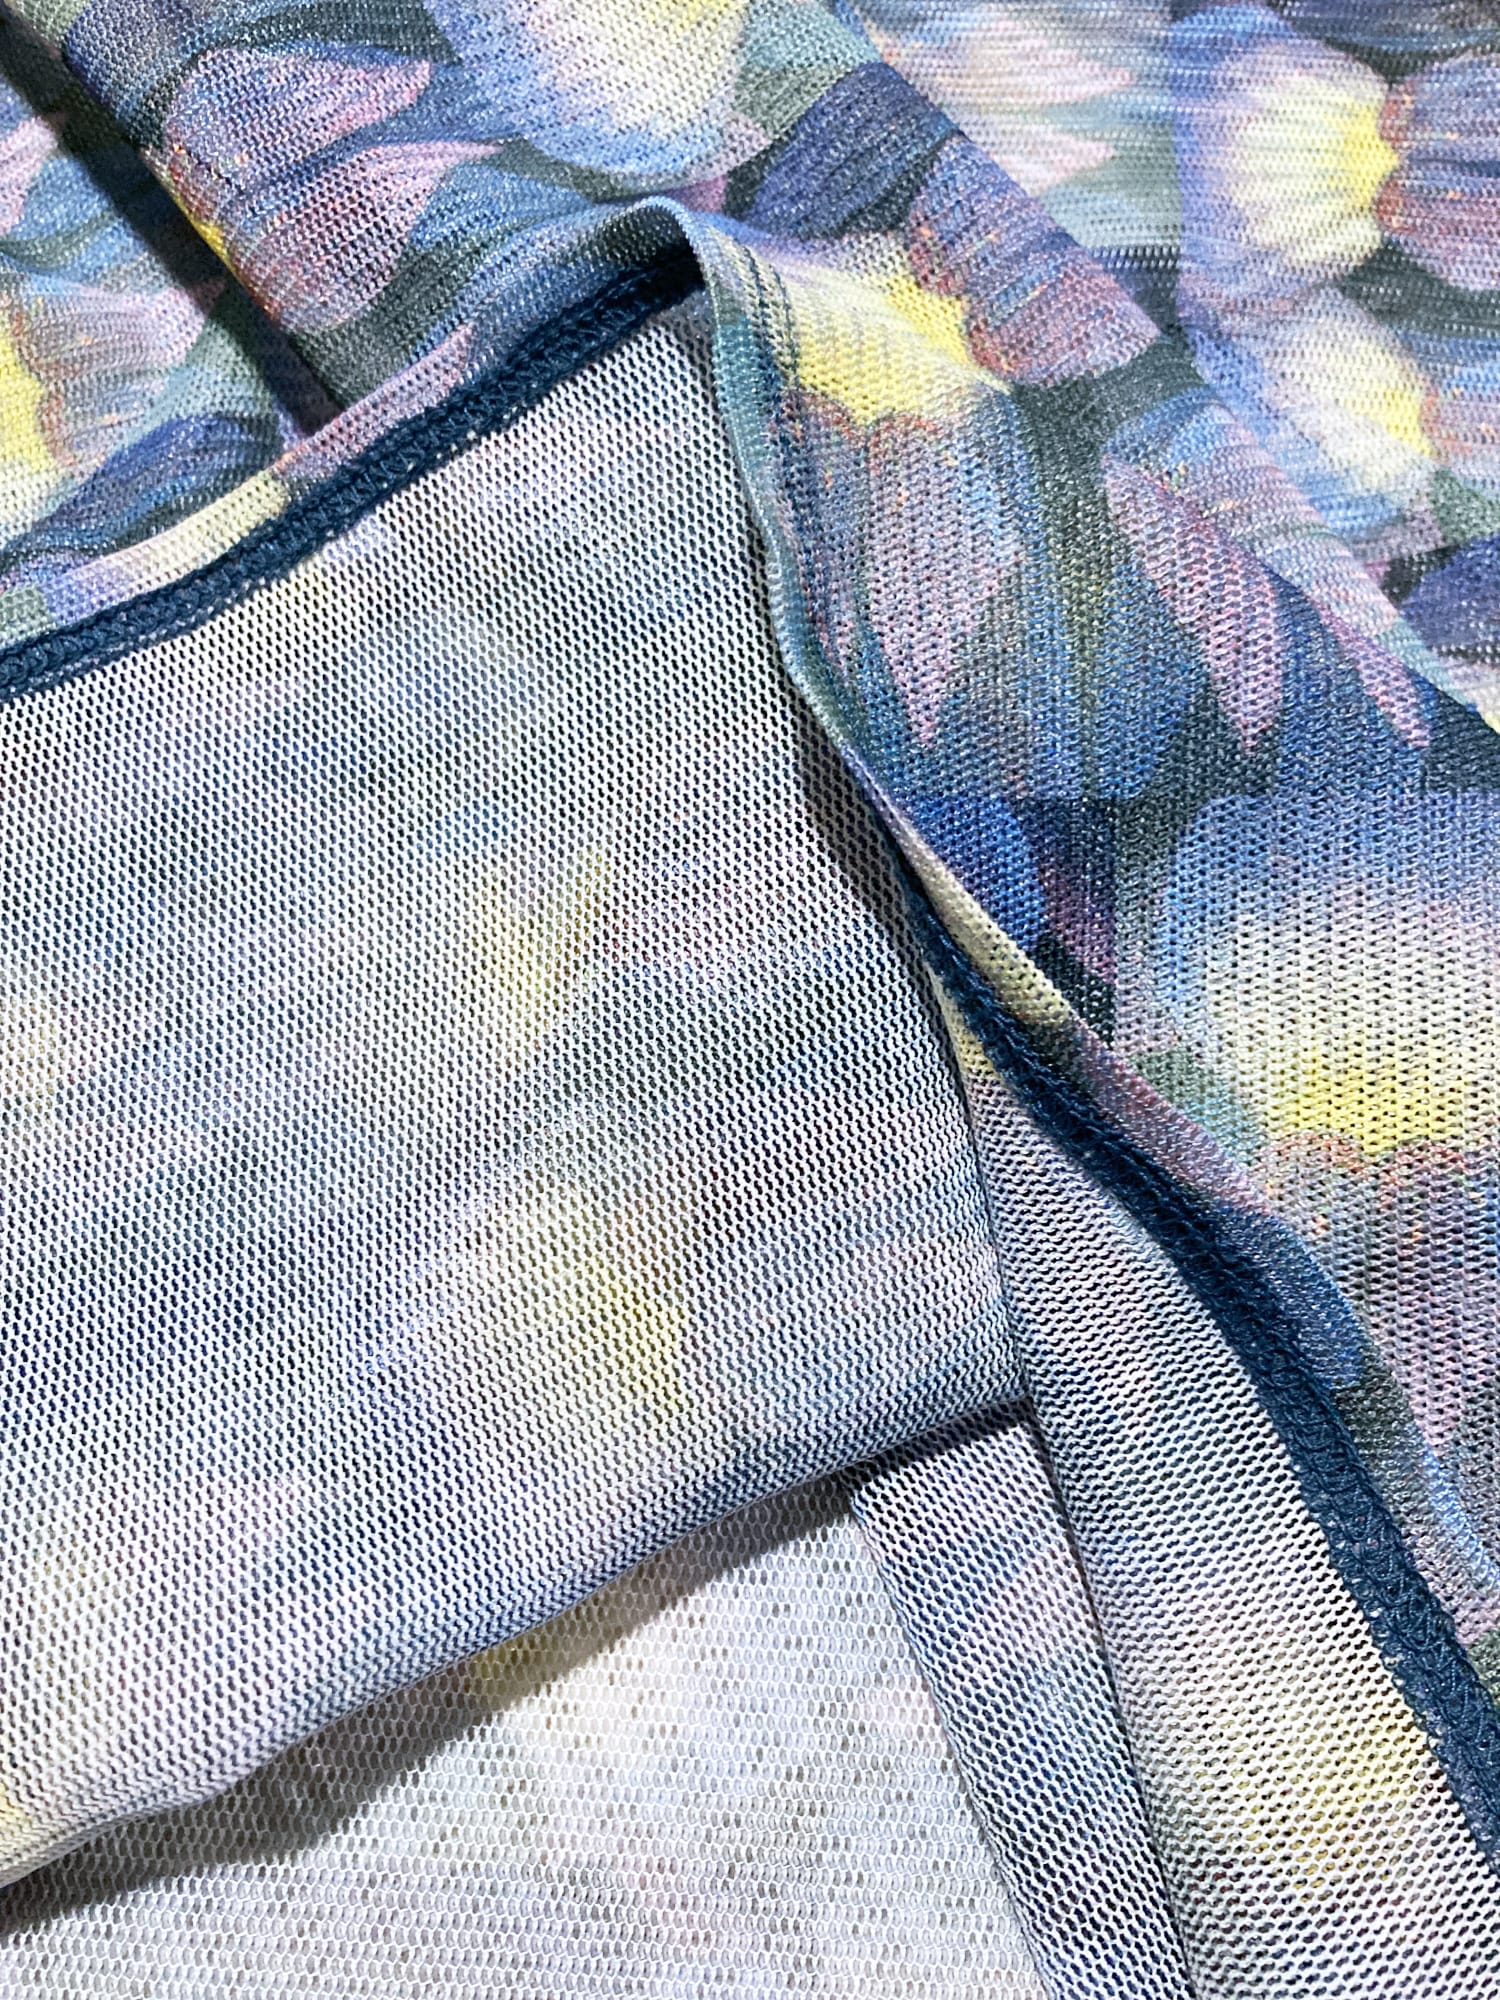 Wrinqle Inoue Pleats purple blue yellow shell pattern poly mesh sleeveless top